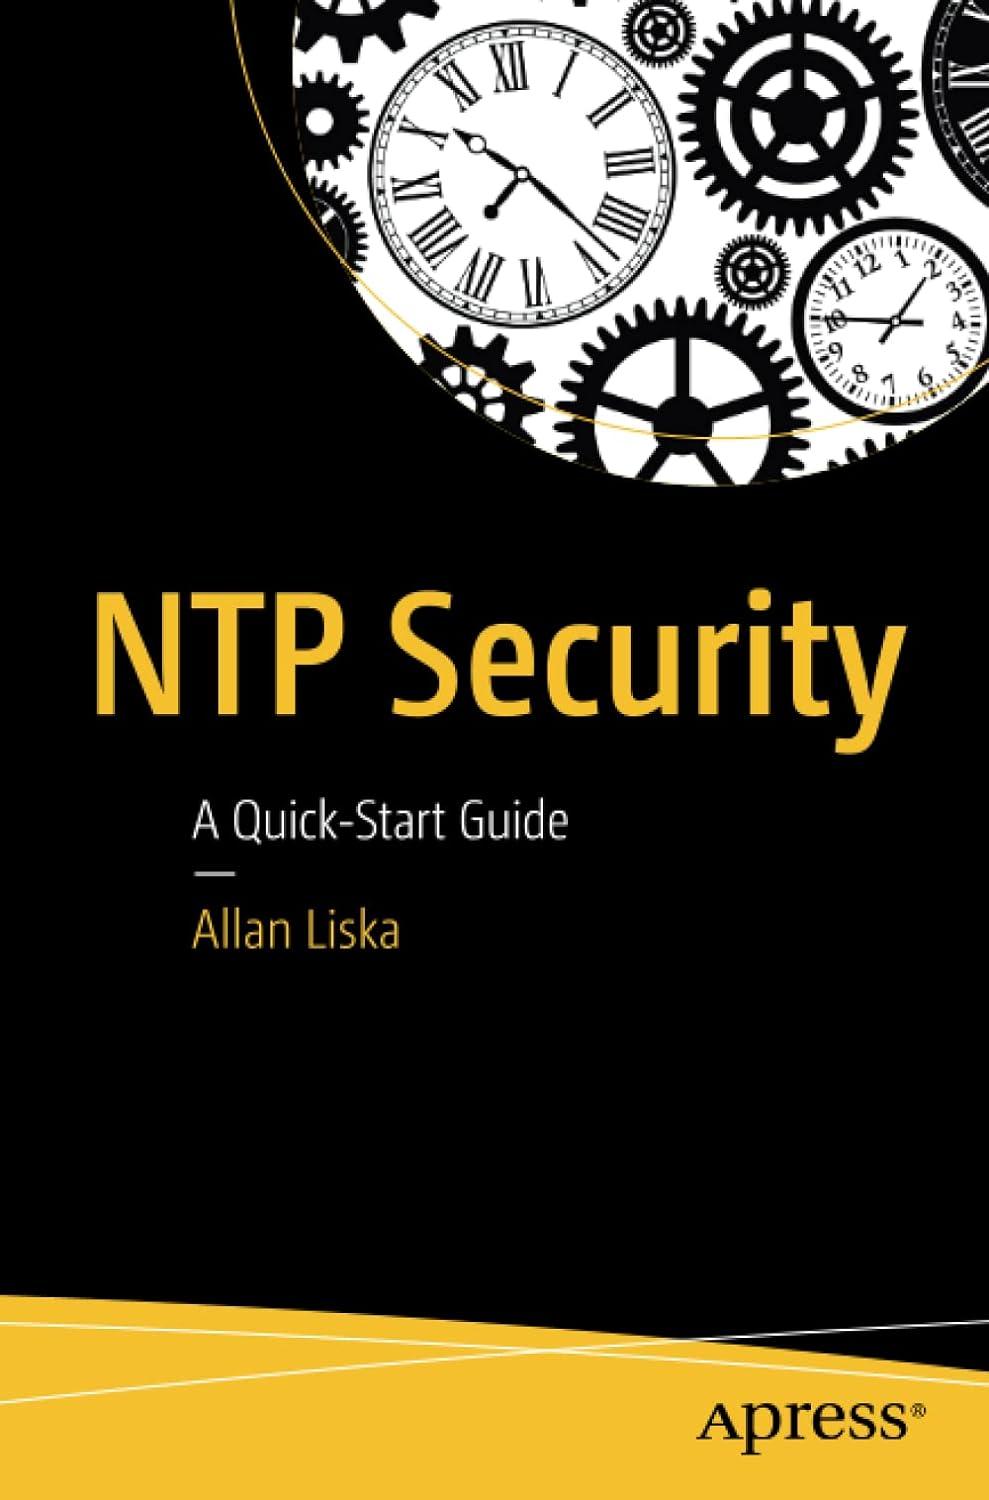 ntp security a quick start guide 1st edition allan liska 1484224116, 978-1484224113